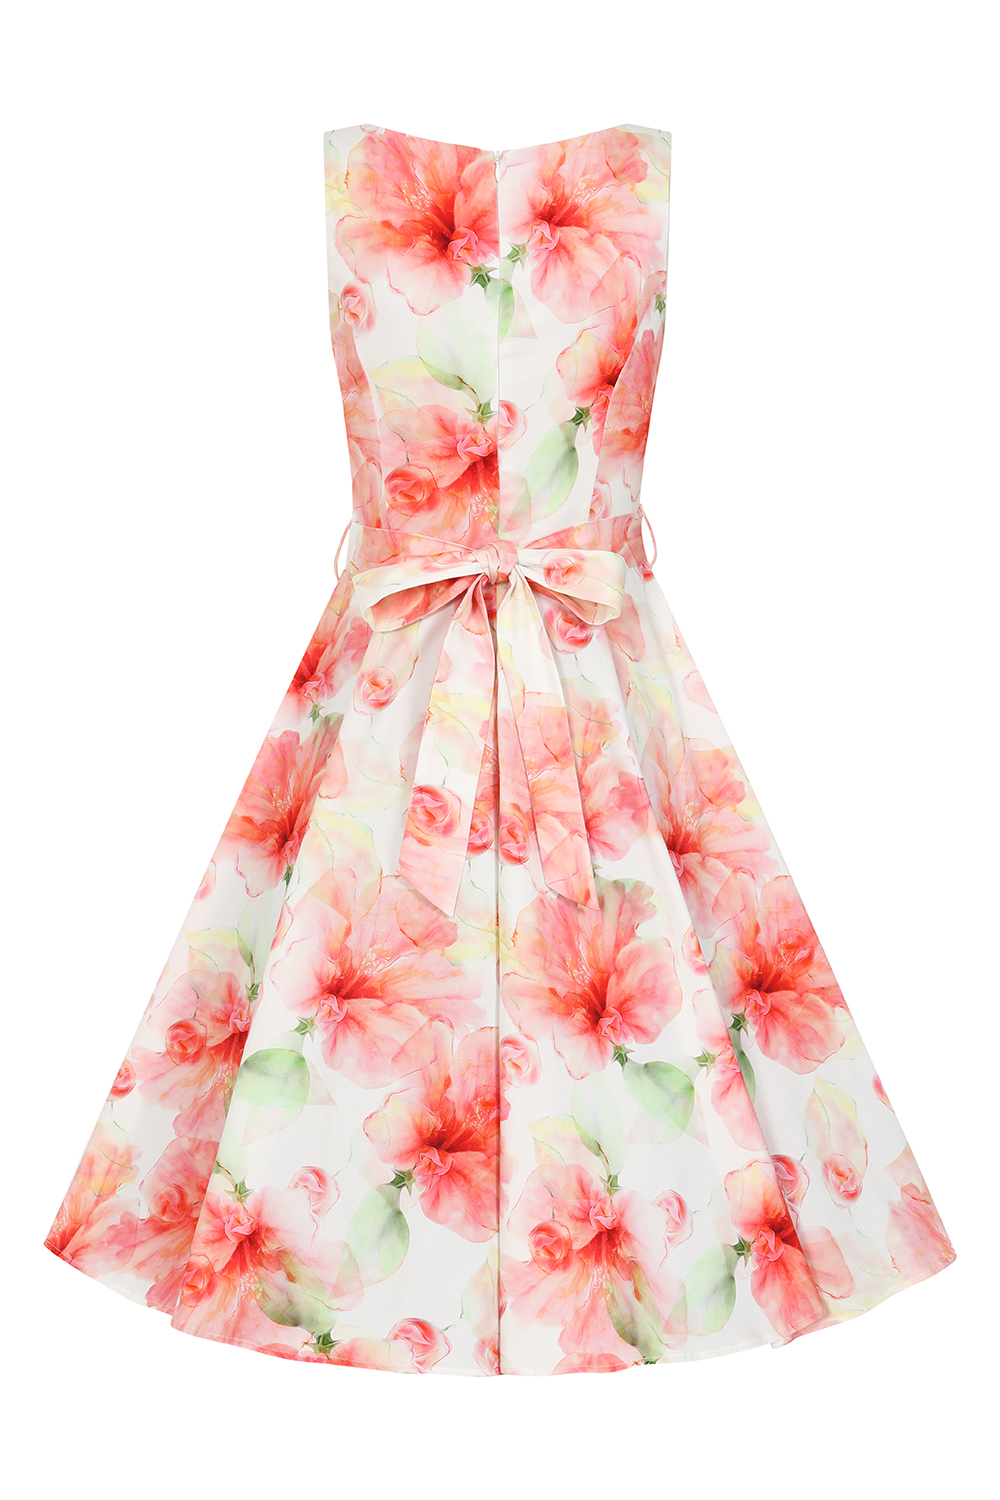 Ayla Floral Swing Dress